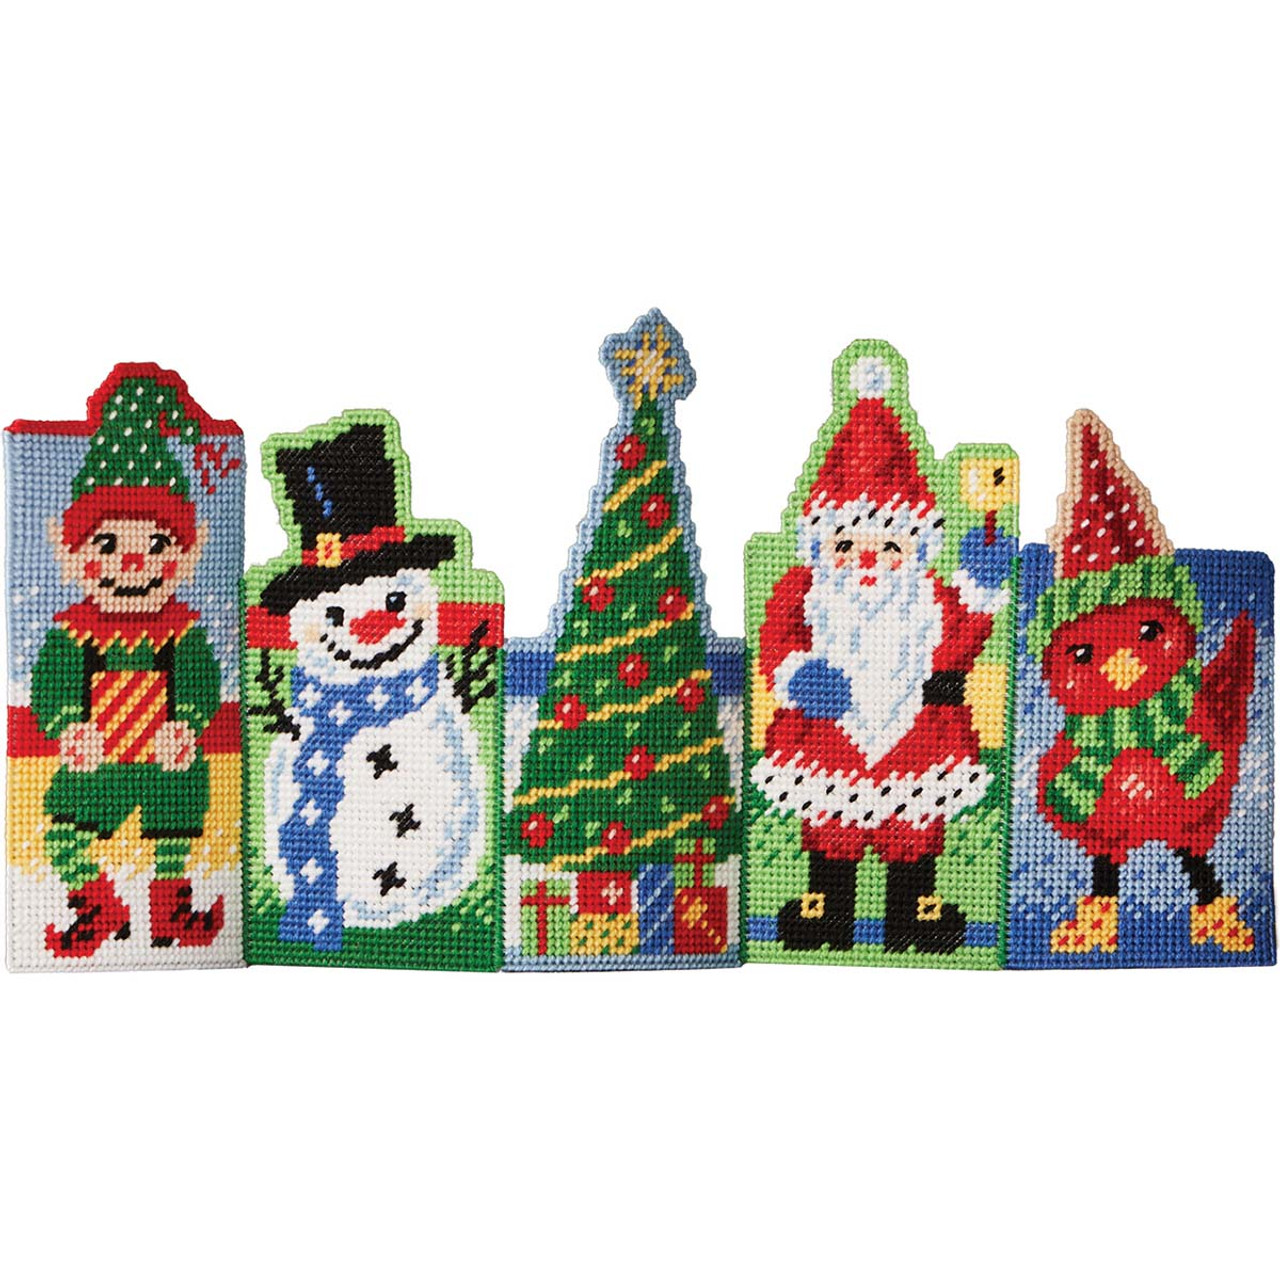 13 Holly Jolly Cross Stitch Christmas Stocking Patterns